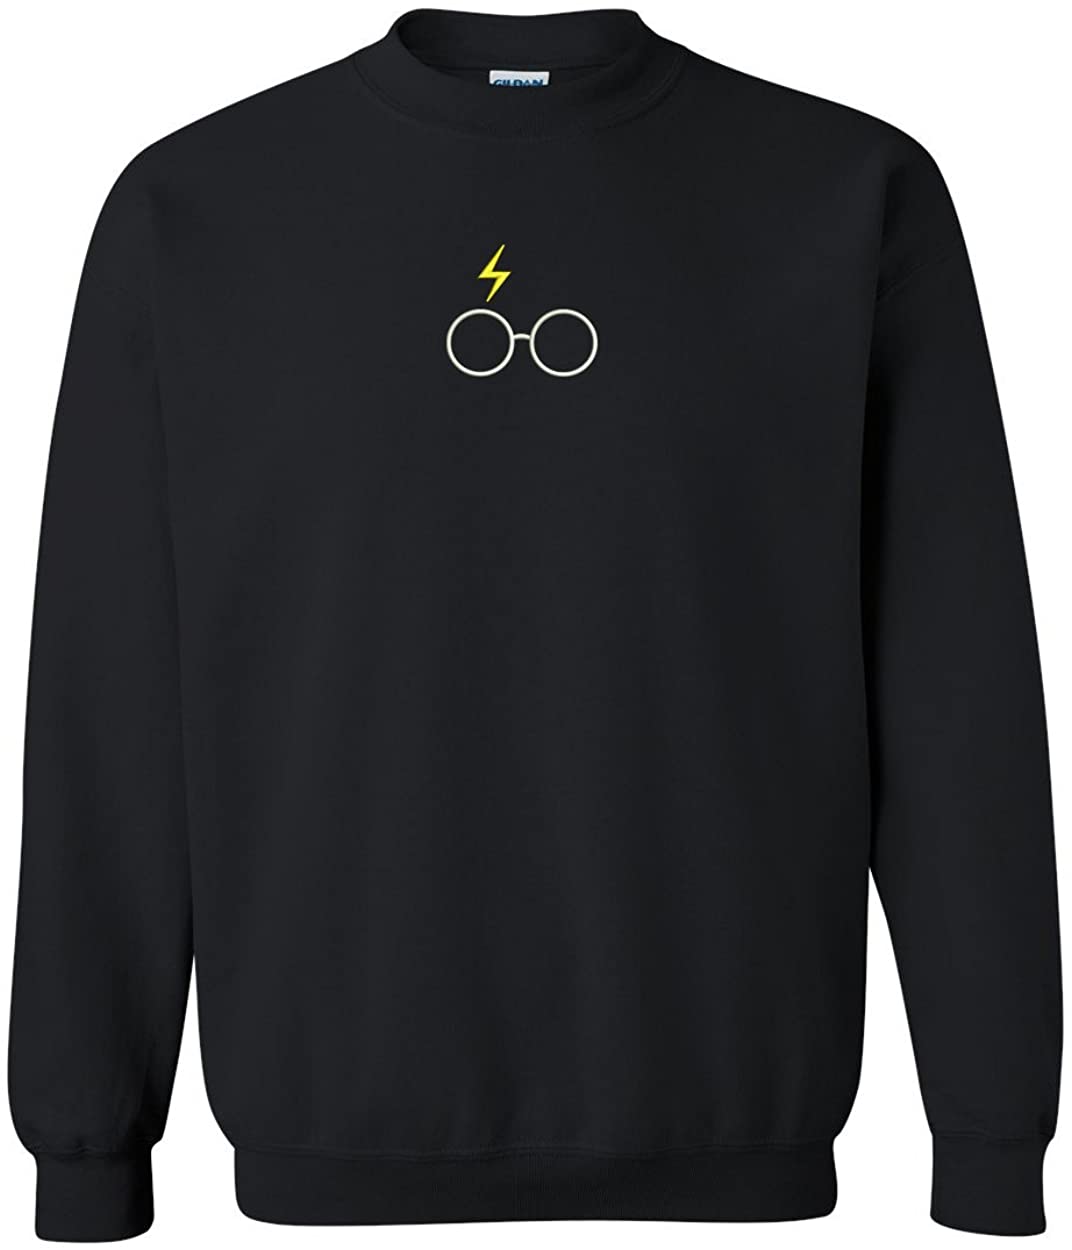 Trendy Apparel Shop Harry Glasses Embroidered Crewneck Sweatshirt - Black - 2XL